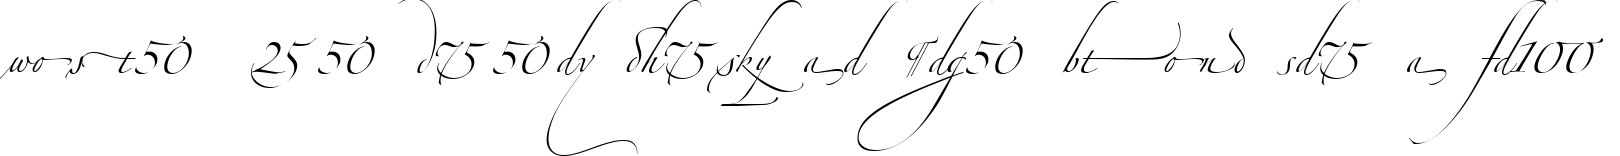 Пример написания шрифтом Alexandra Zeferino Ornamental текста на французском